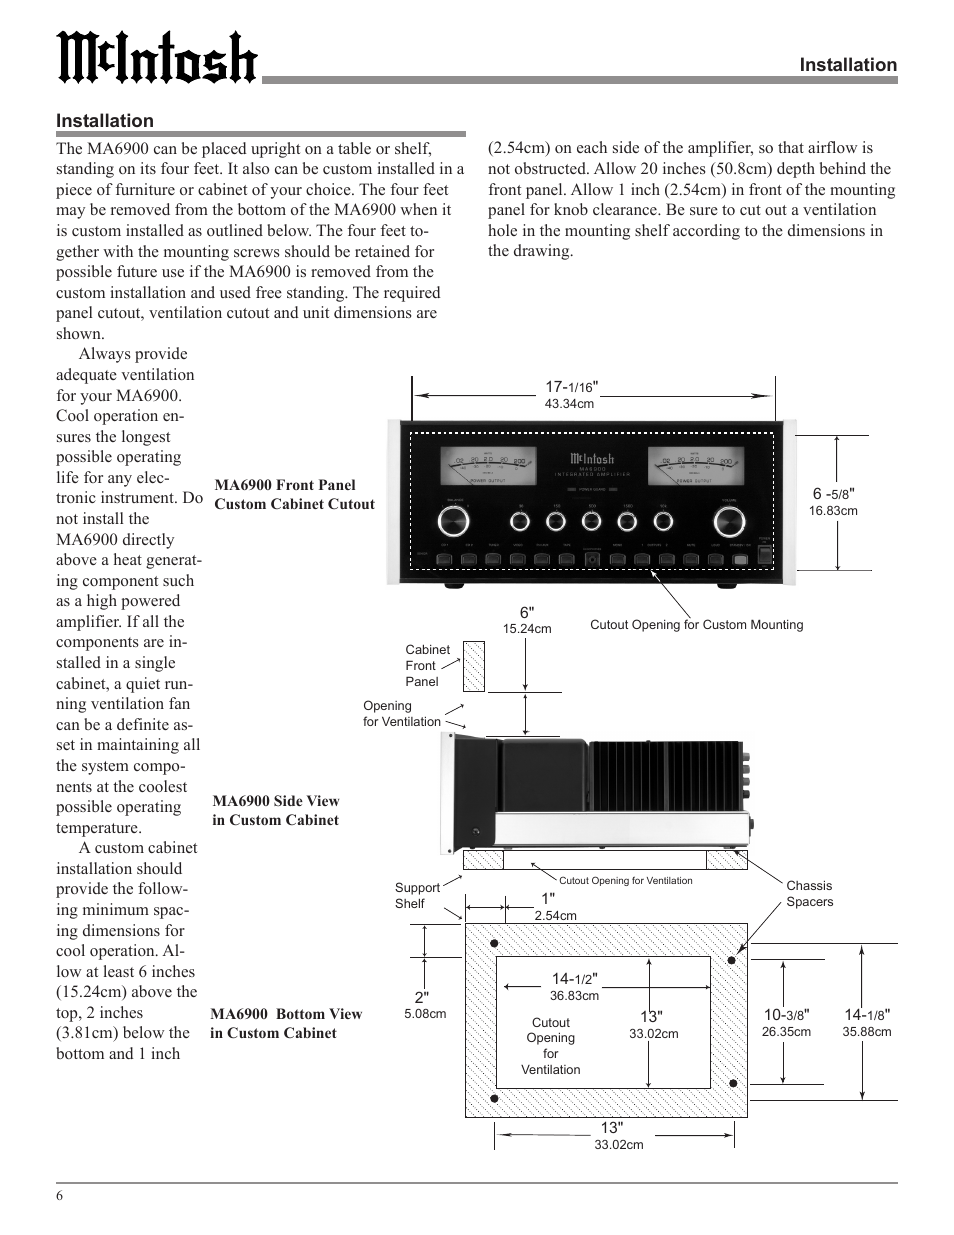 Installation | McIntosh MA6900 User Manual | Page 6 / 24 | Original mode